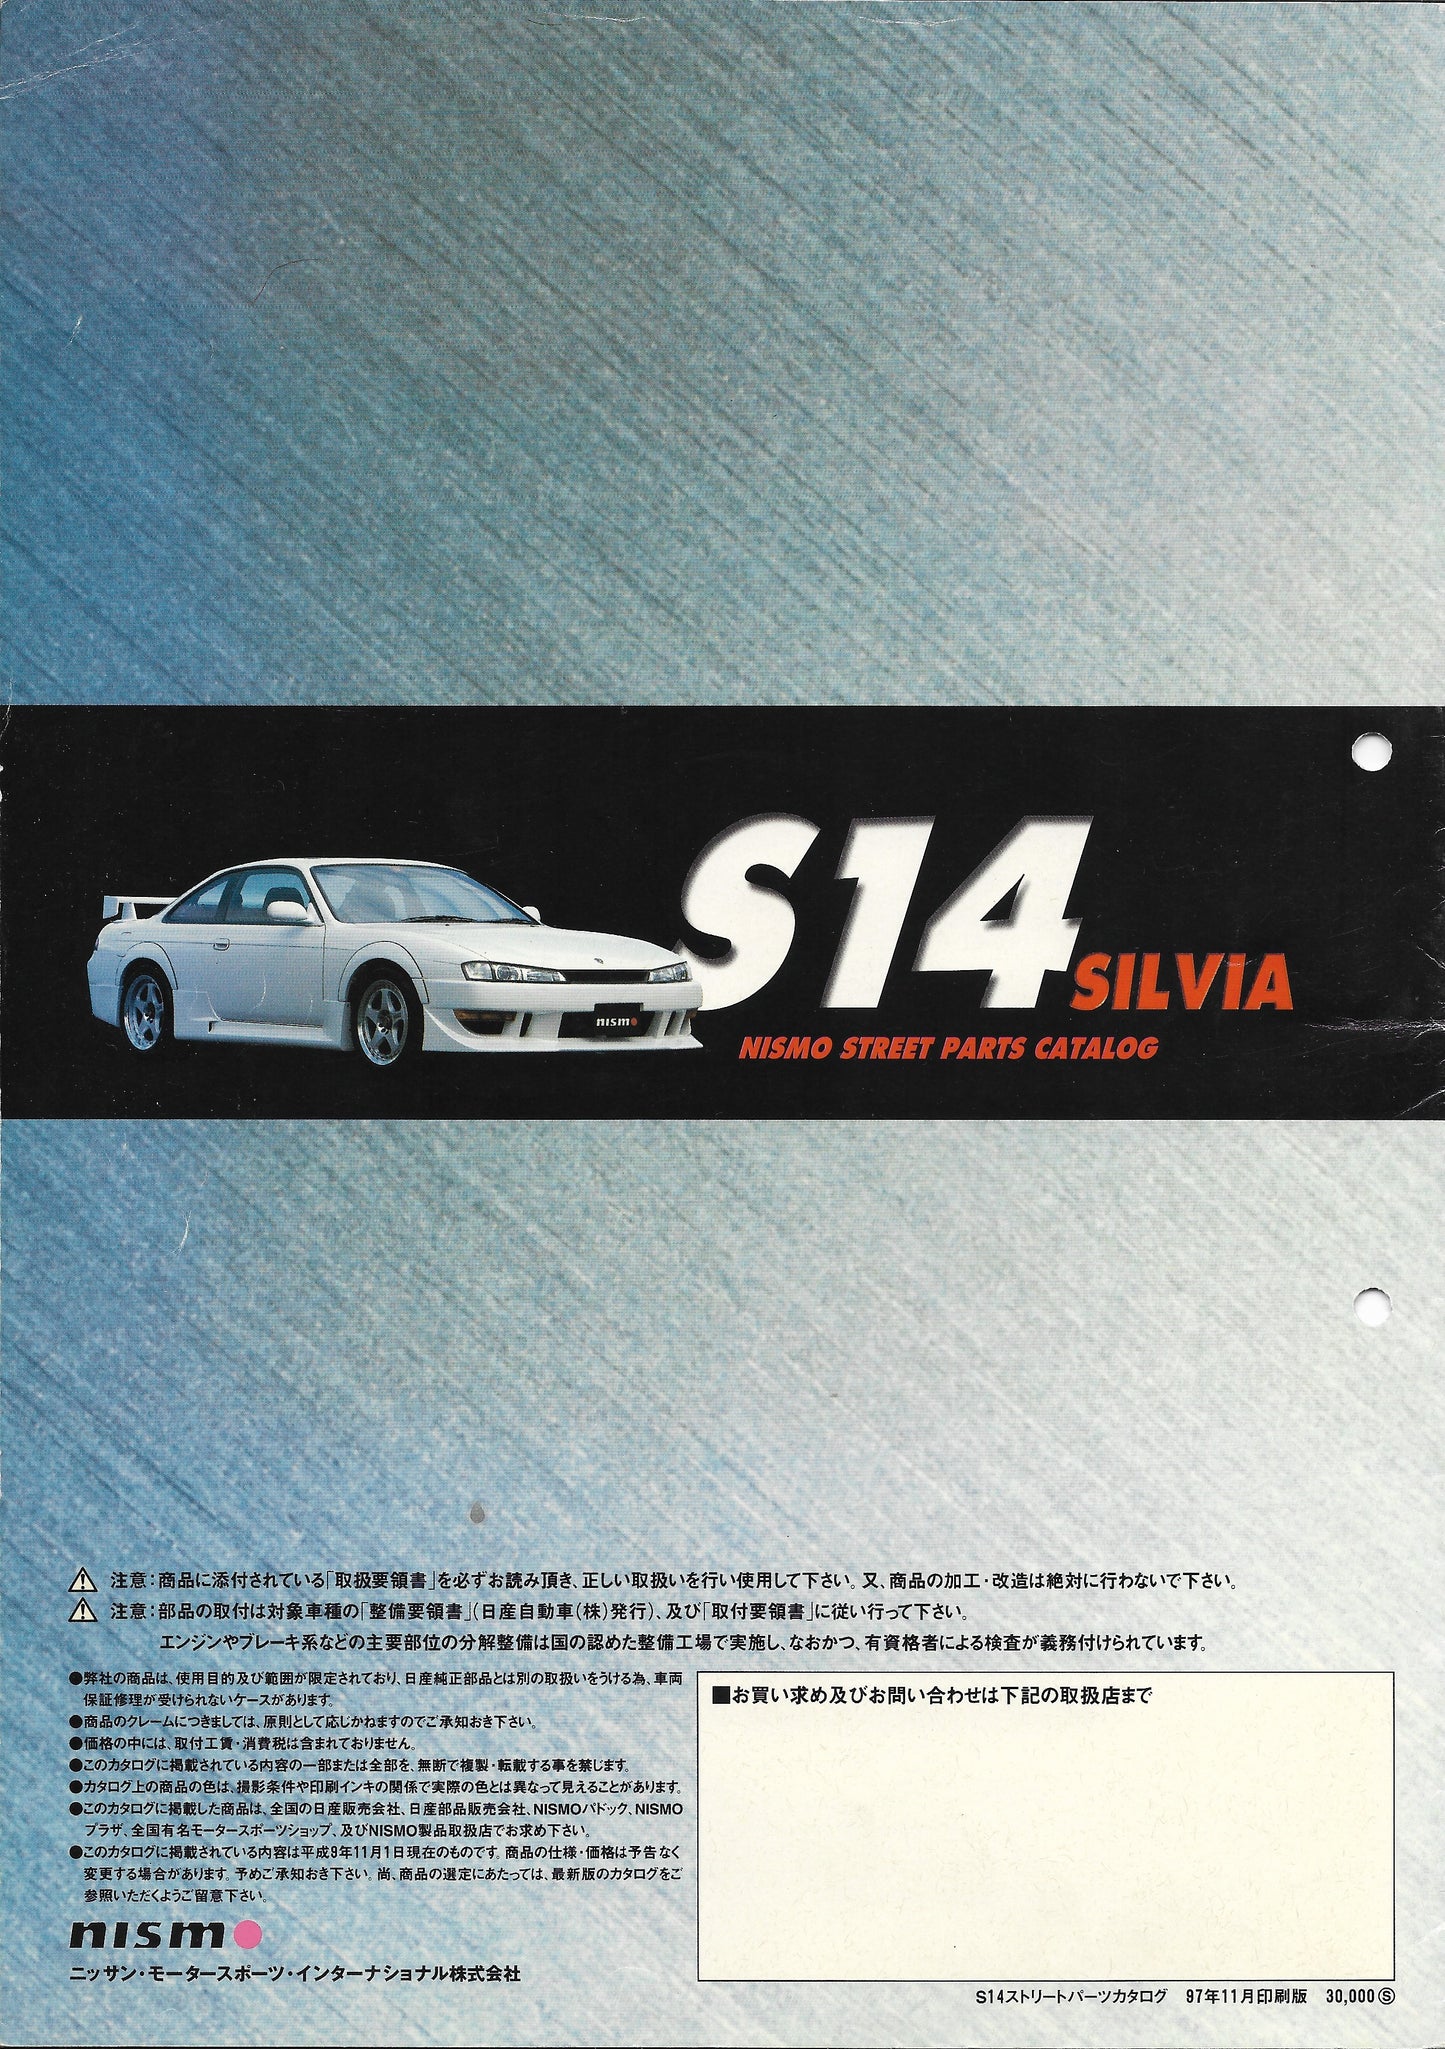 Nissan Silvia S14 Nismo Street Parts Catalog